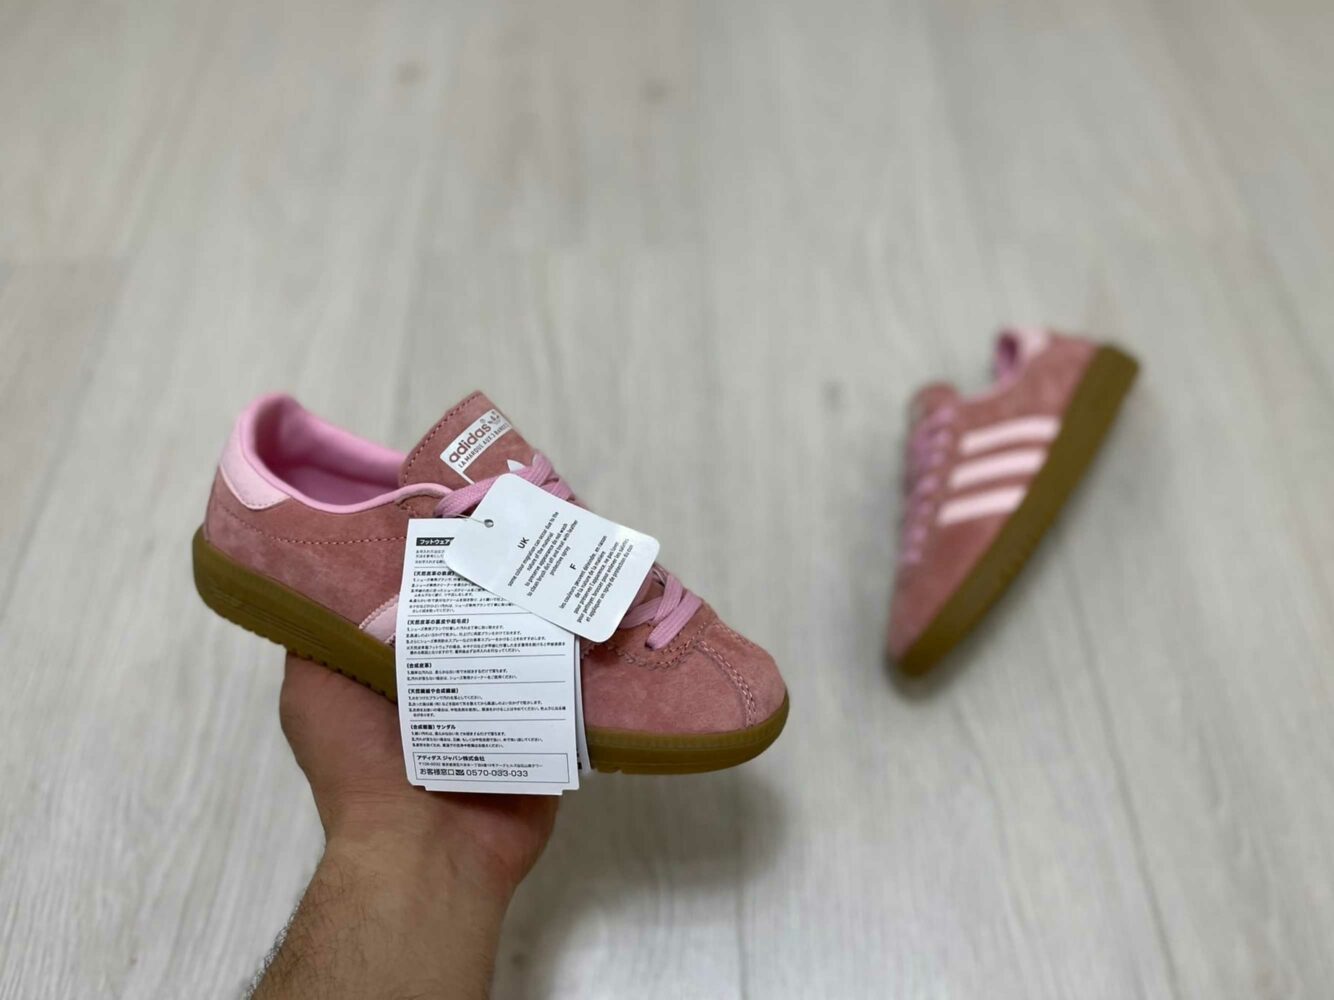 adidas bermuda glow pink GY7386 купить